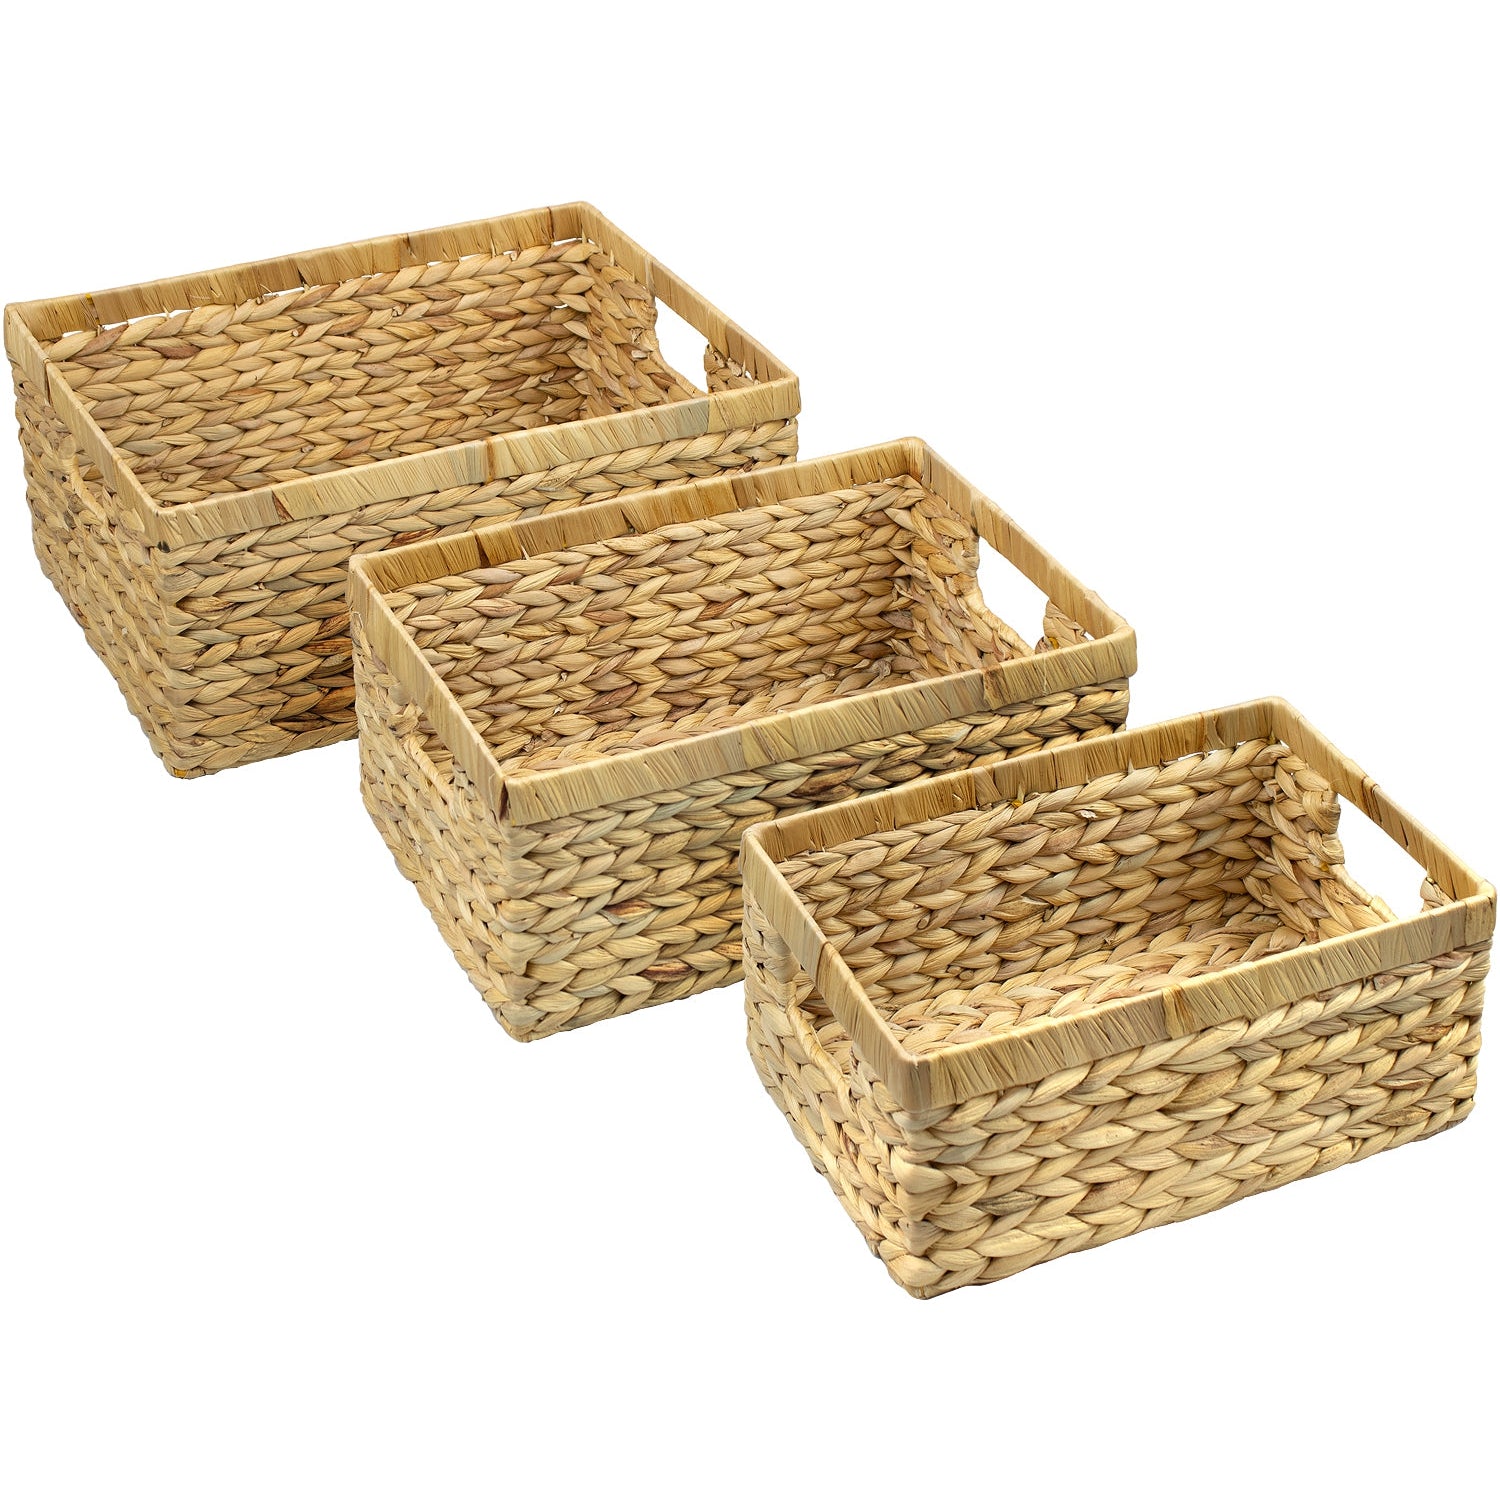 Woven Water Hyacinth Baskets, Set of 3